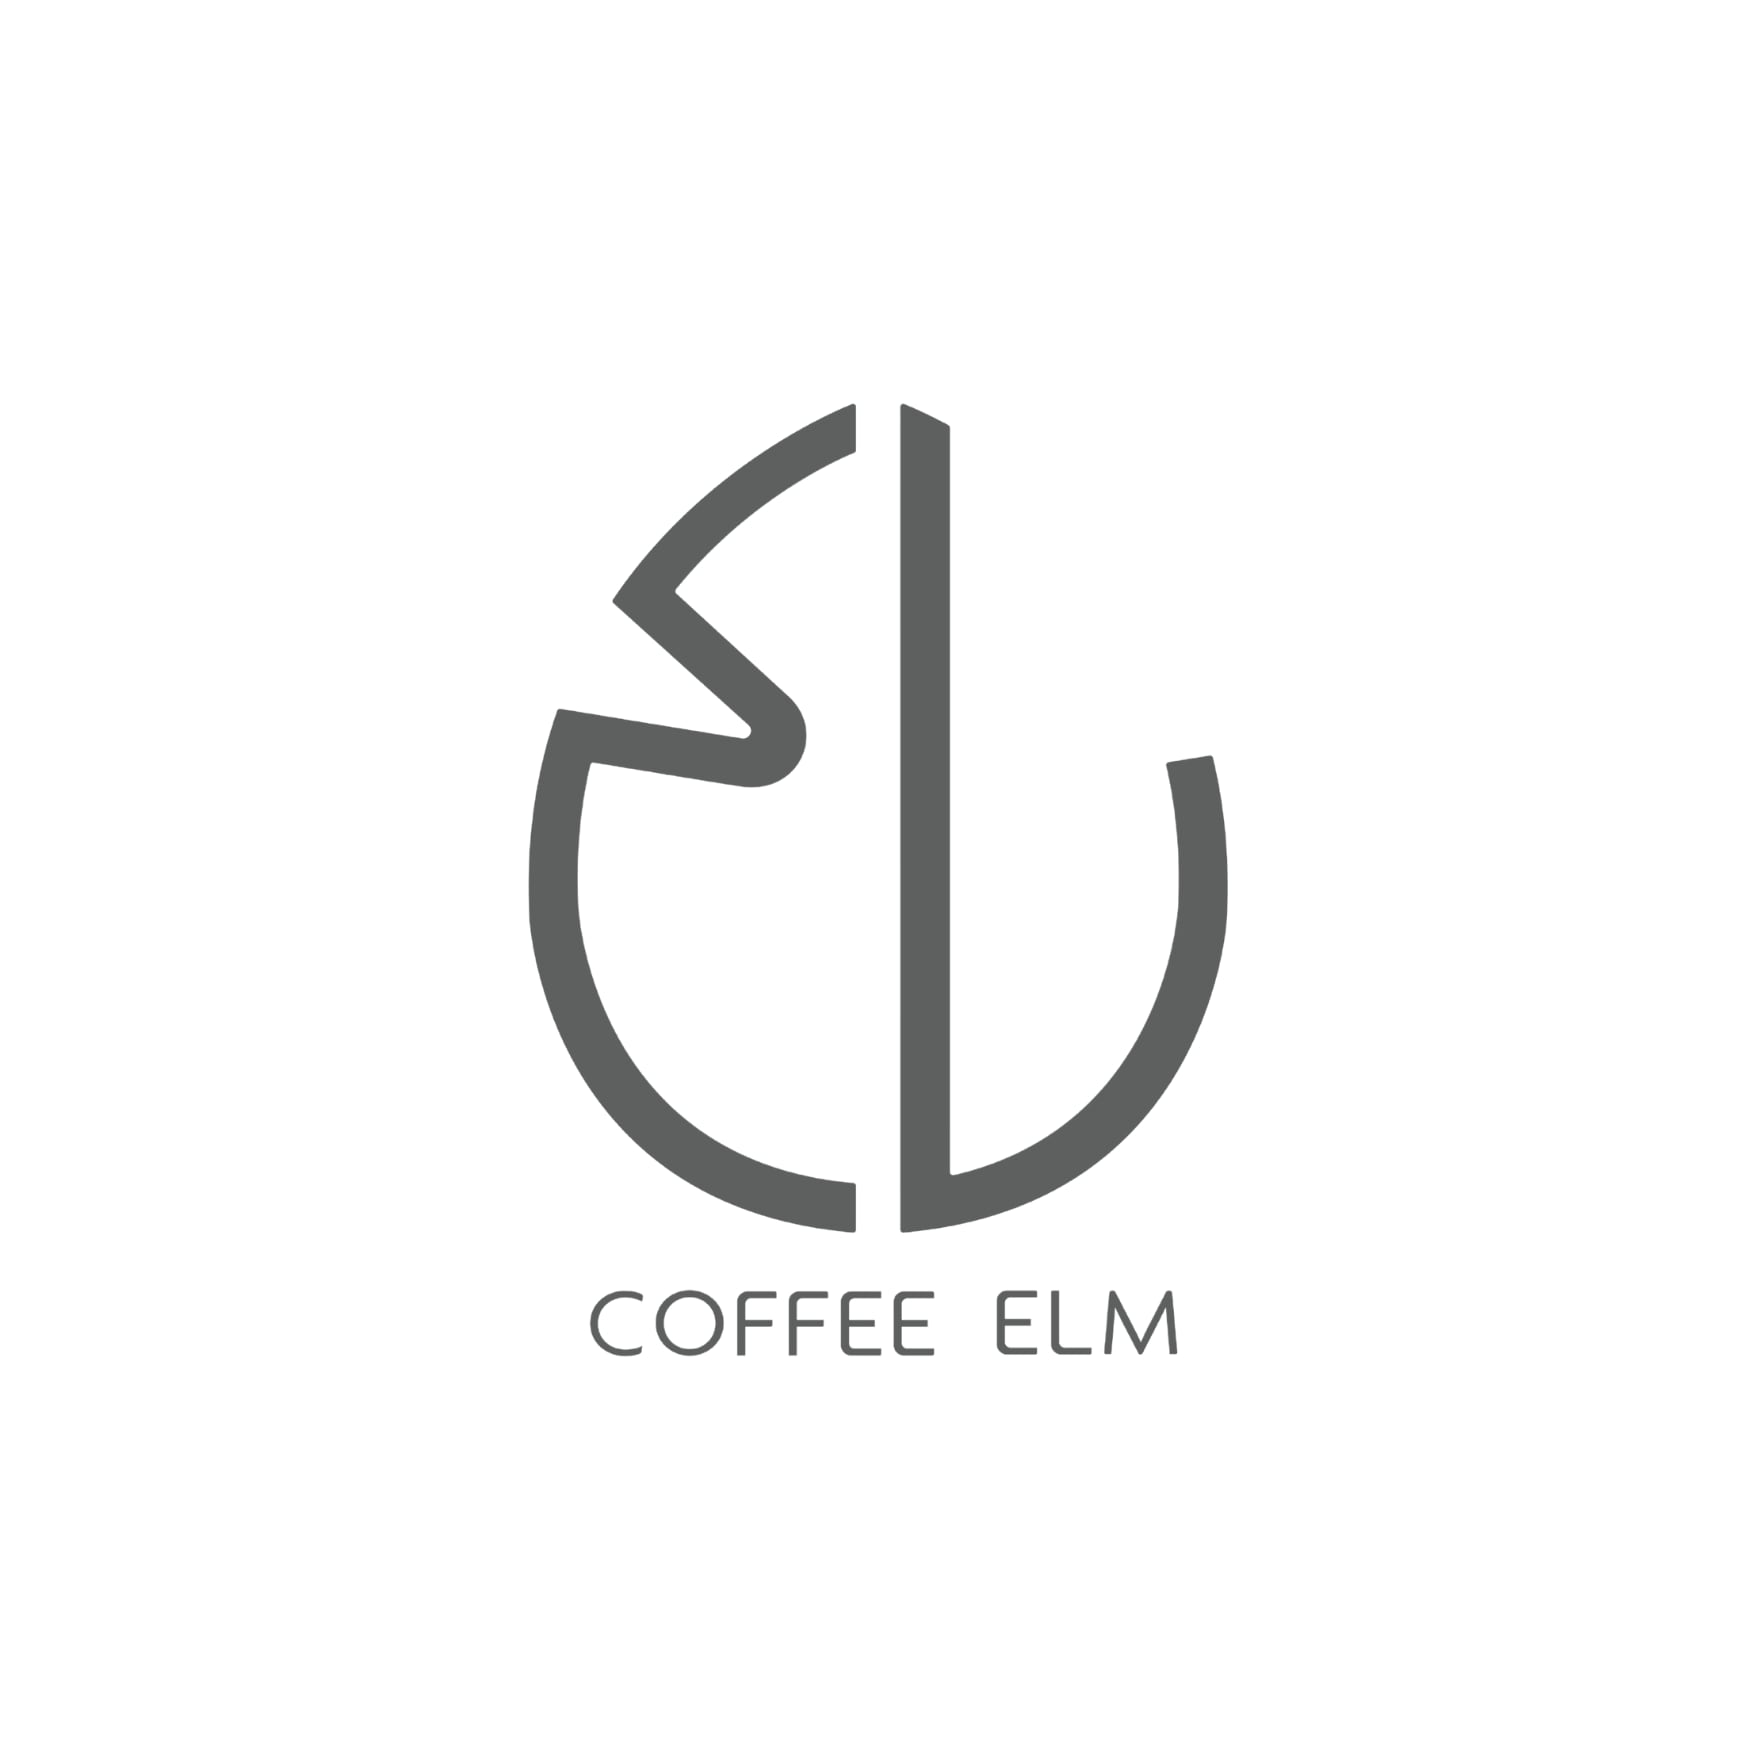 COFFEE ELM